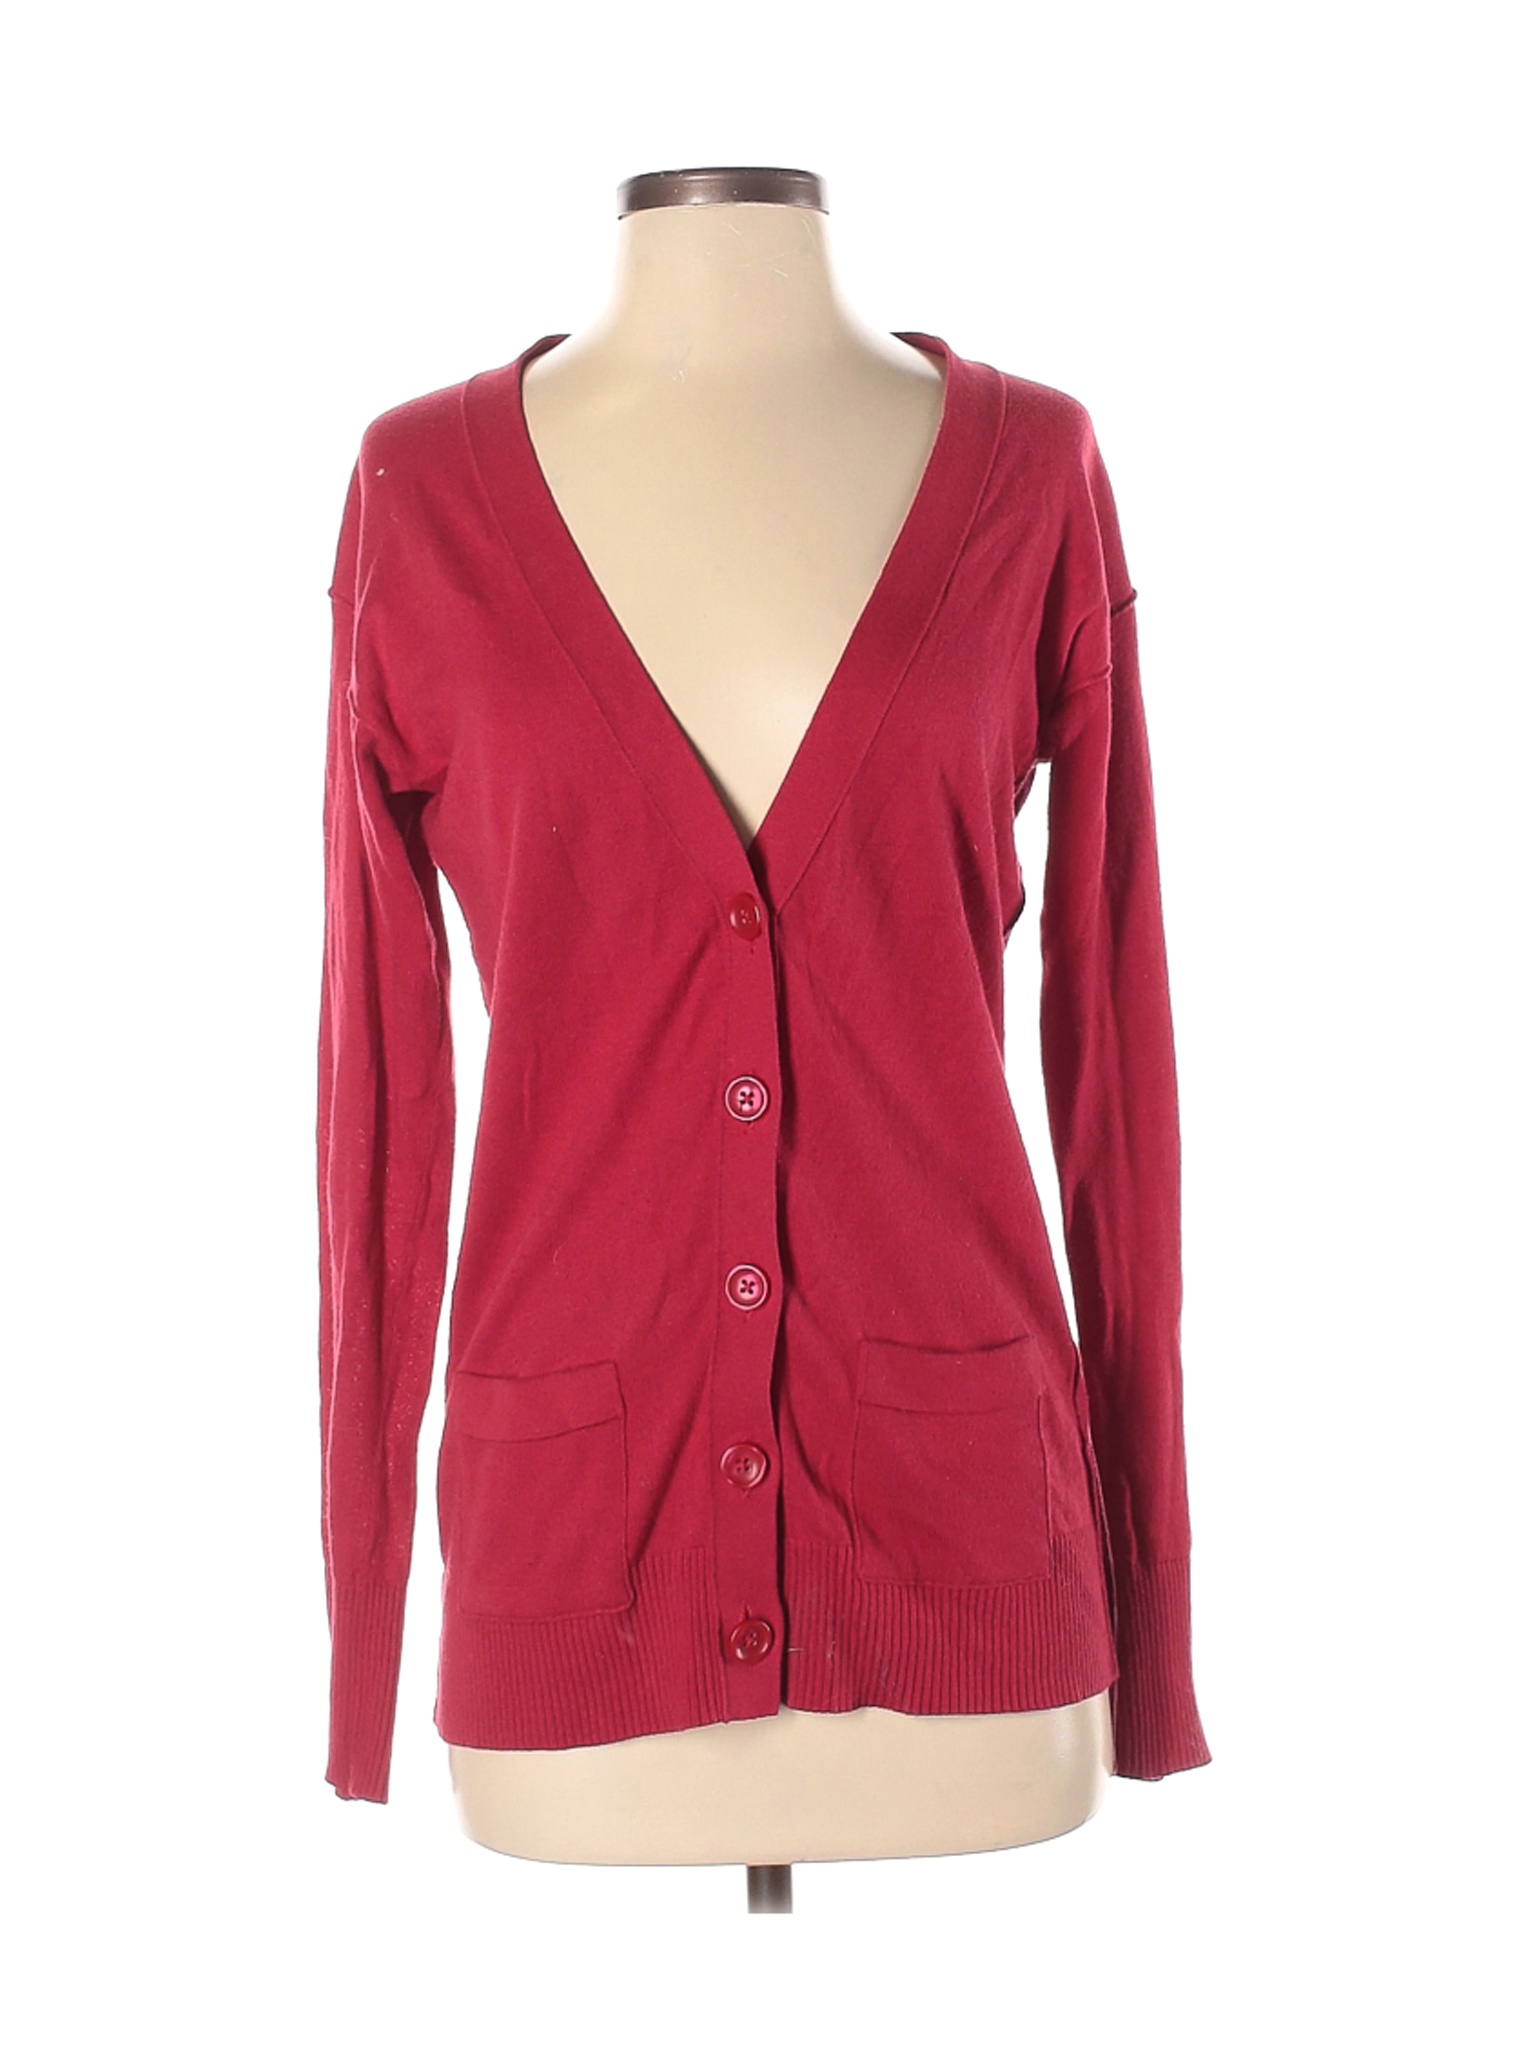 Mossimo Supply Co. Women Red Cardigan S | eBay